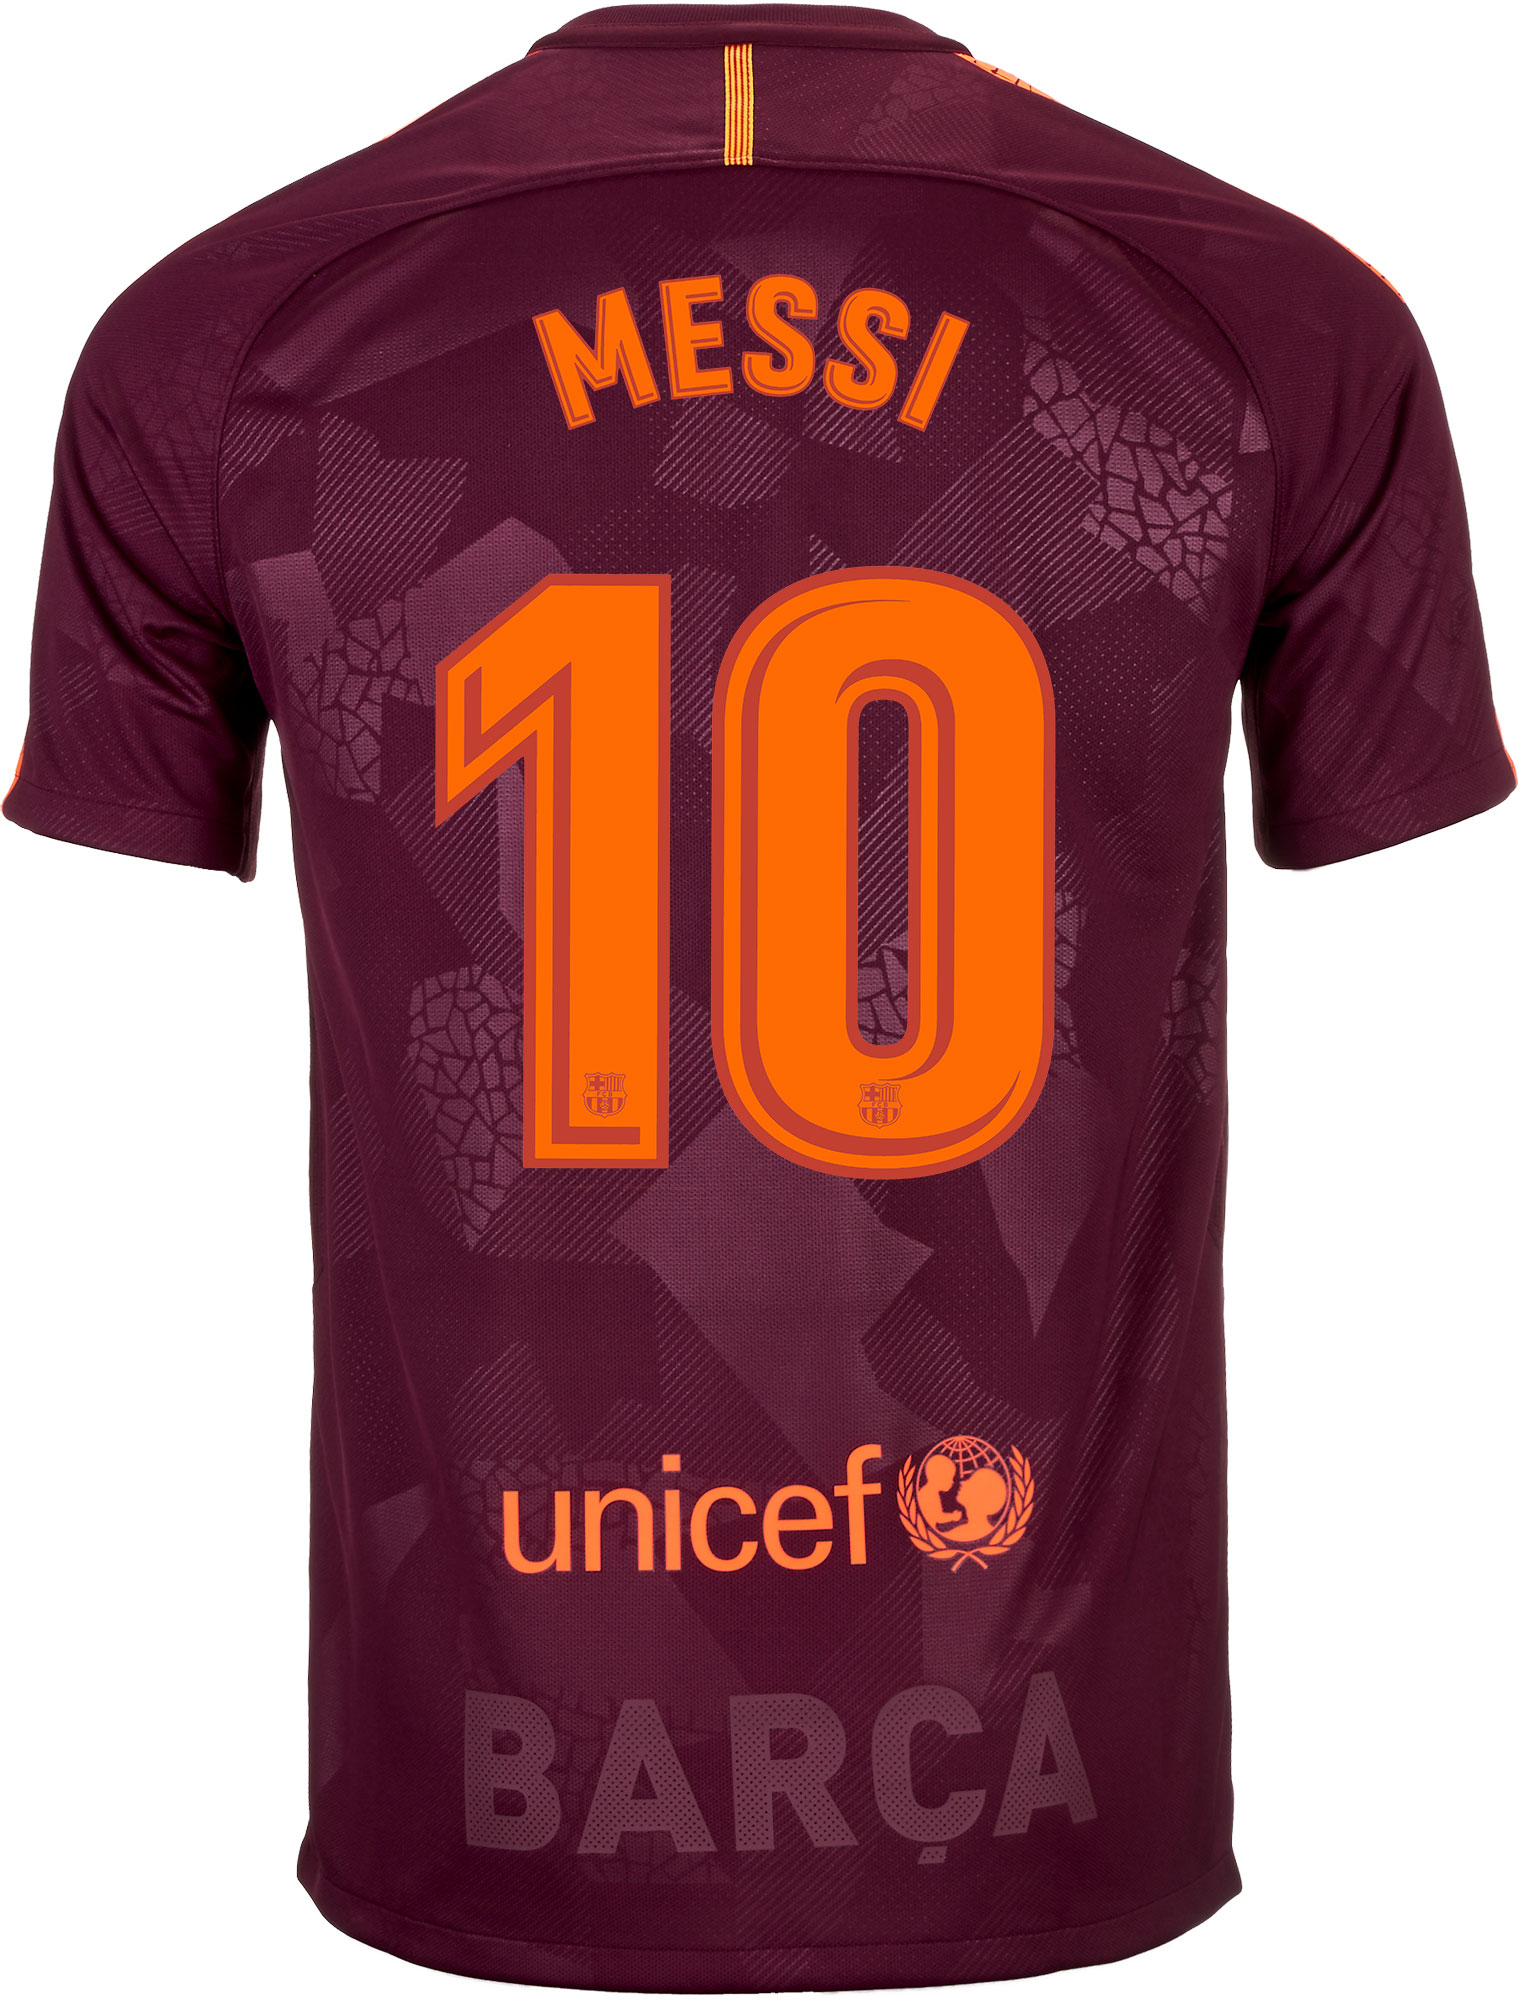 Nike Messi Jersey 2017-18